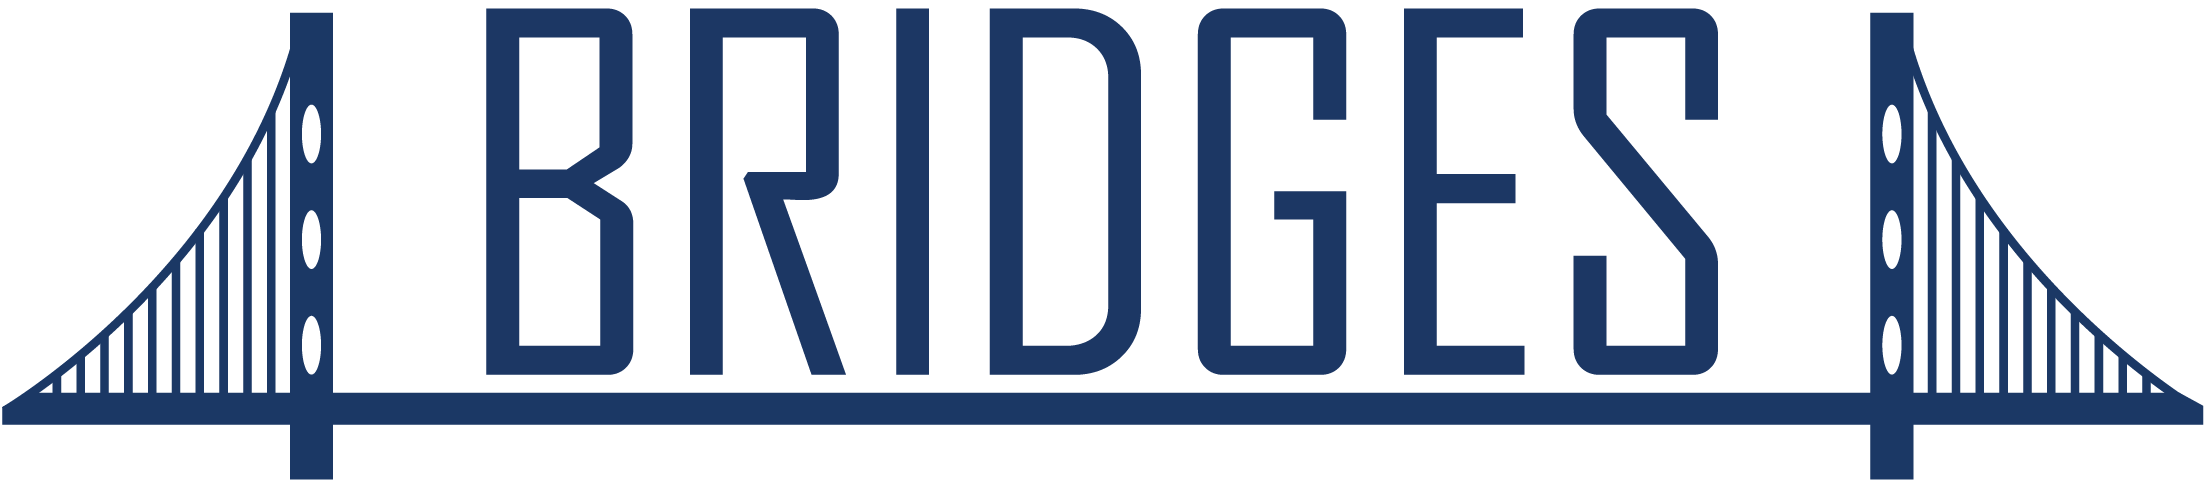 BRIDGES_Logo.png